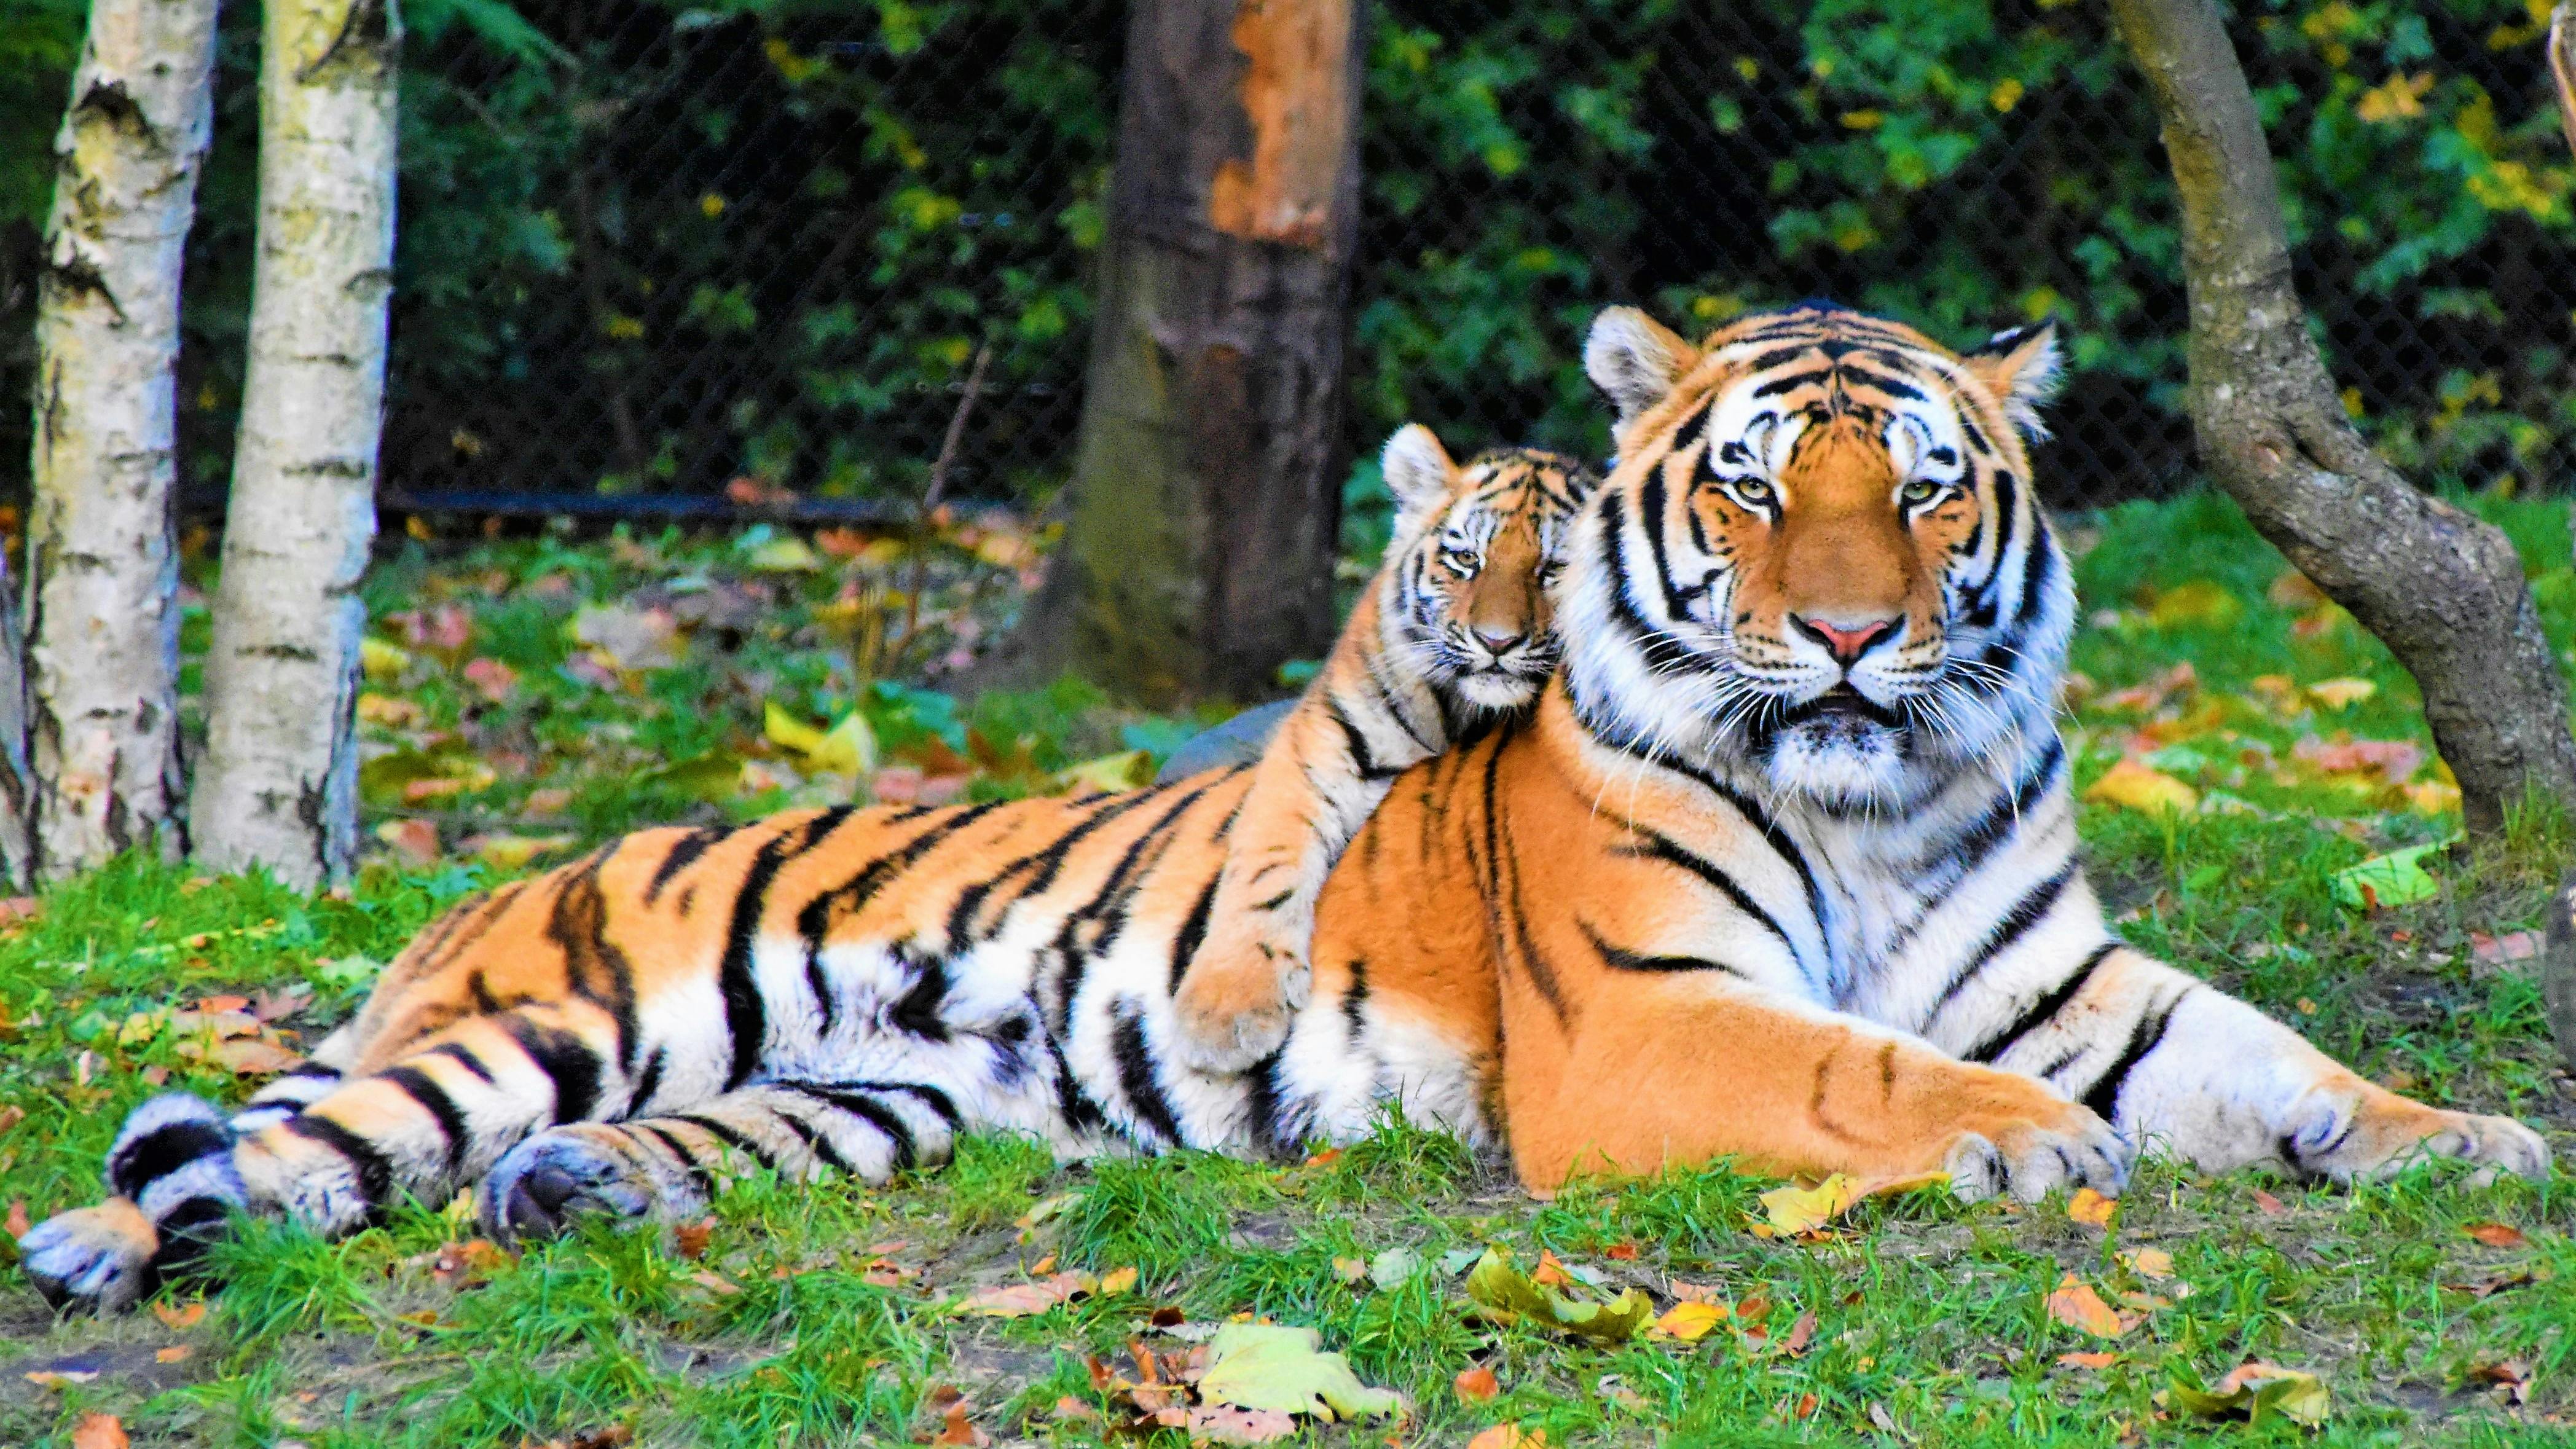 800+ Tiger Bilder und Fotos · Kostenlos Downloaden · Pexels Stock-Fotos